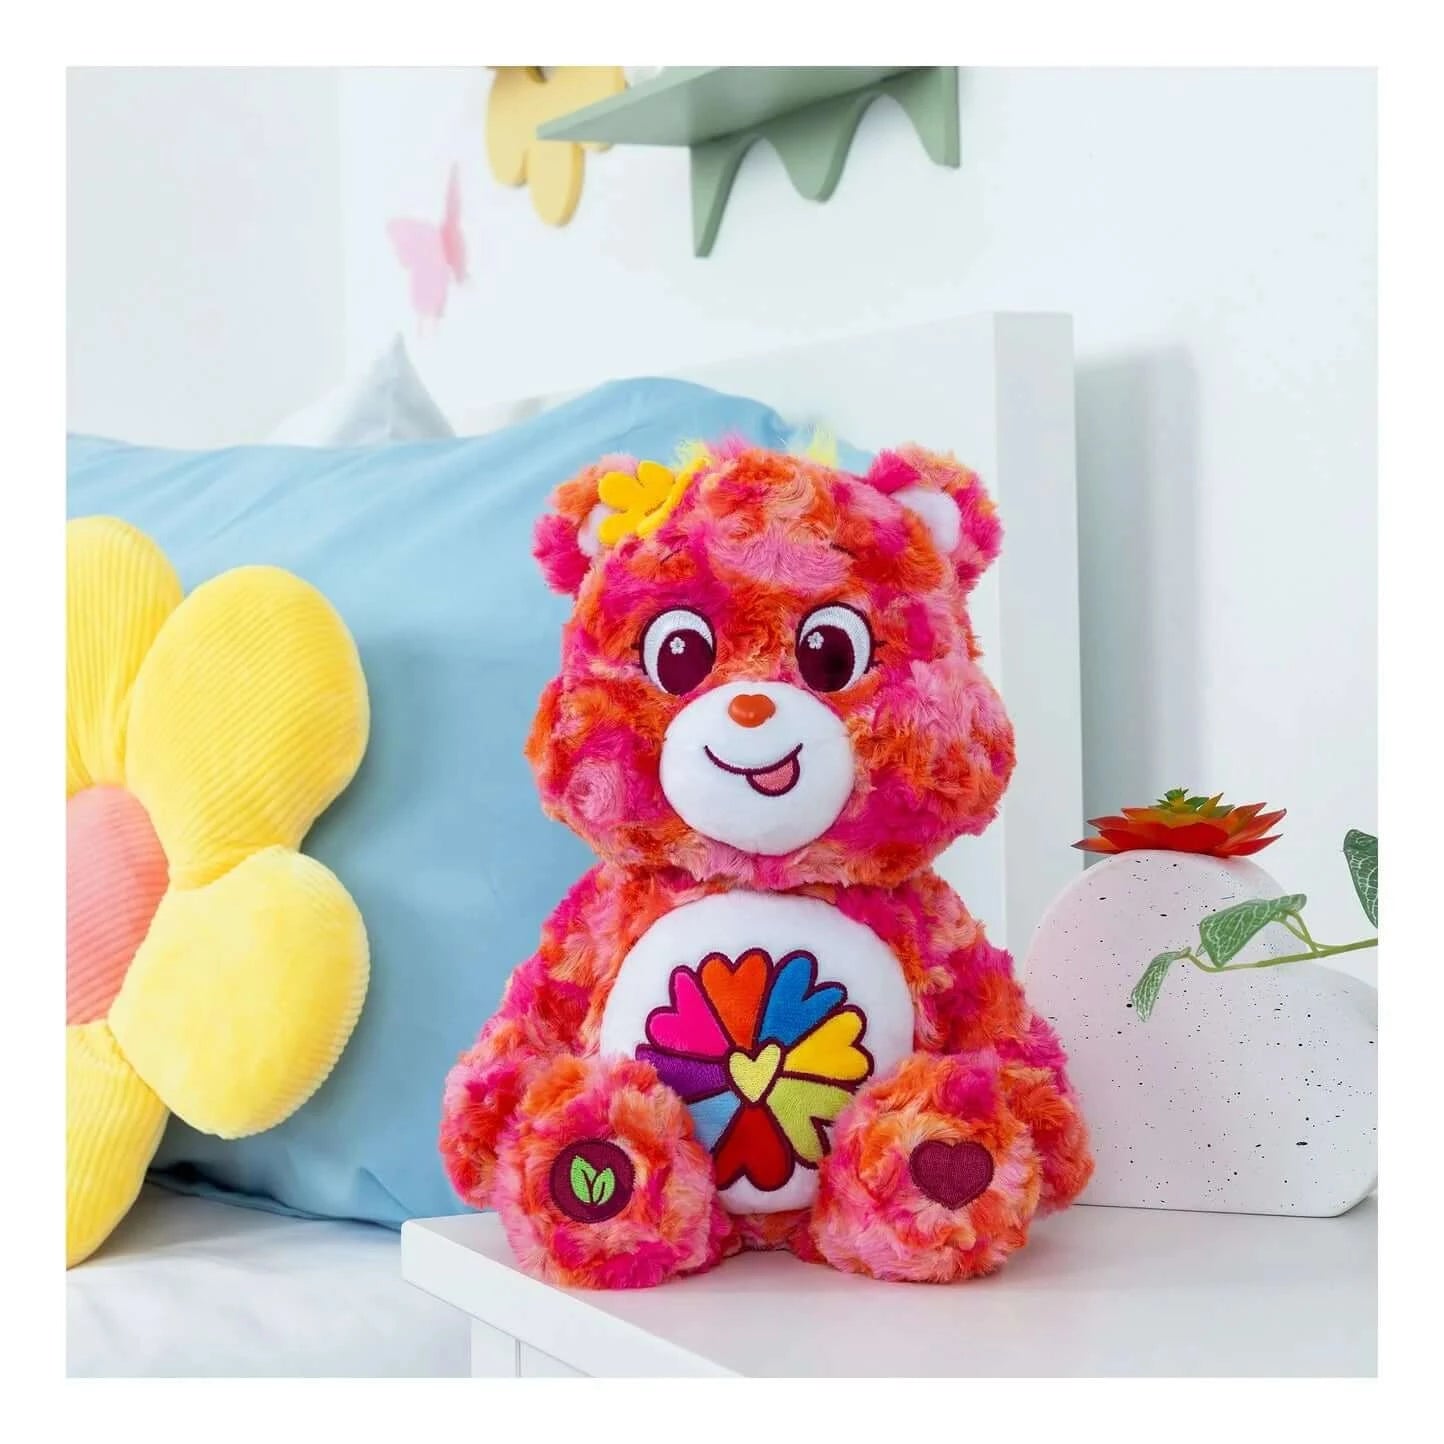 Care Bears Flower Power Bear Plush